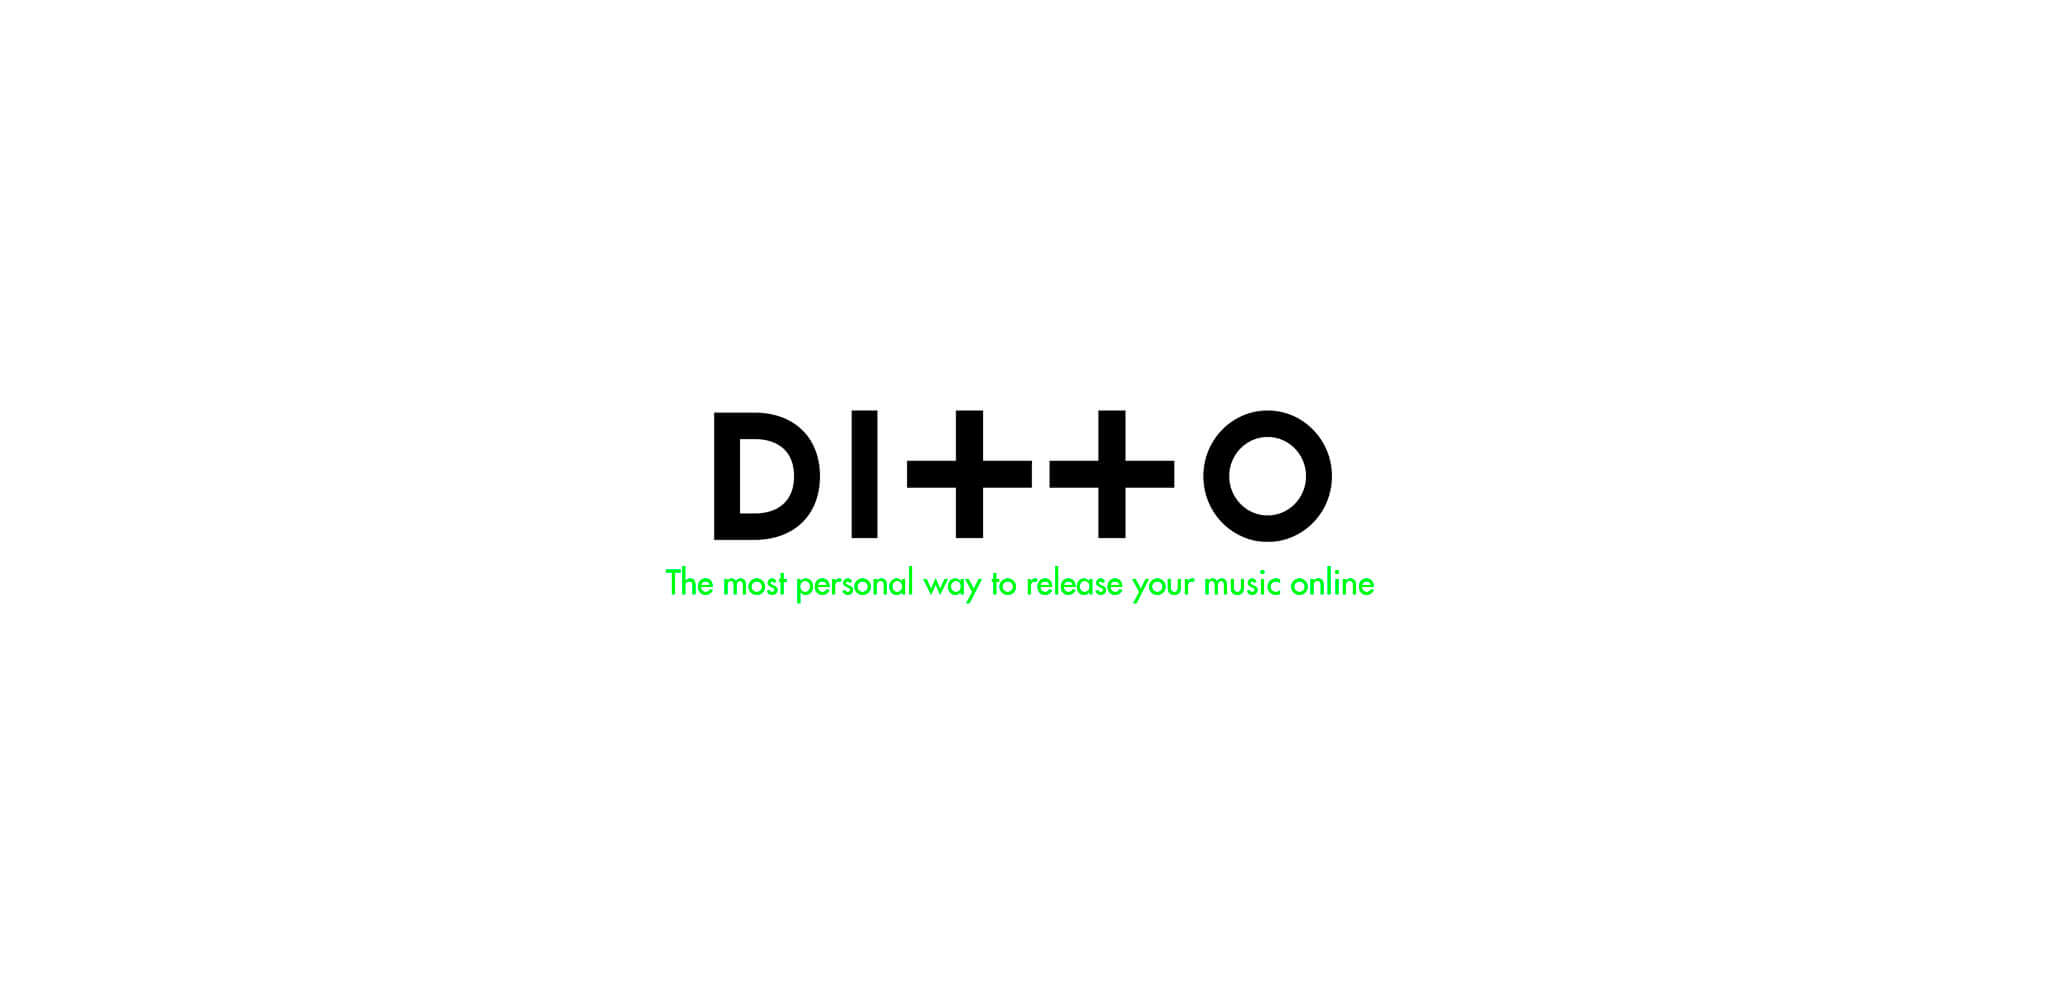 Ditto Digital Music Distribution Marketing & Promotion